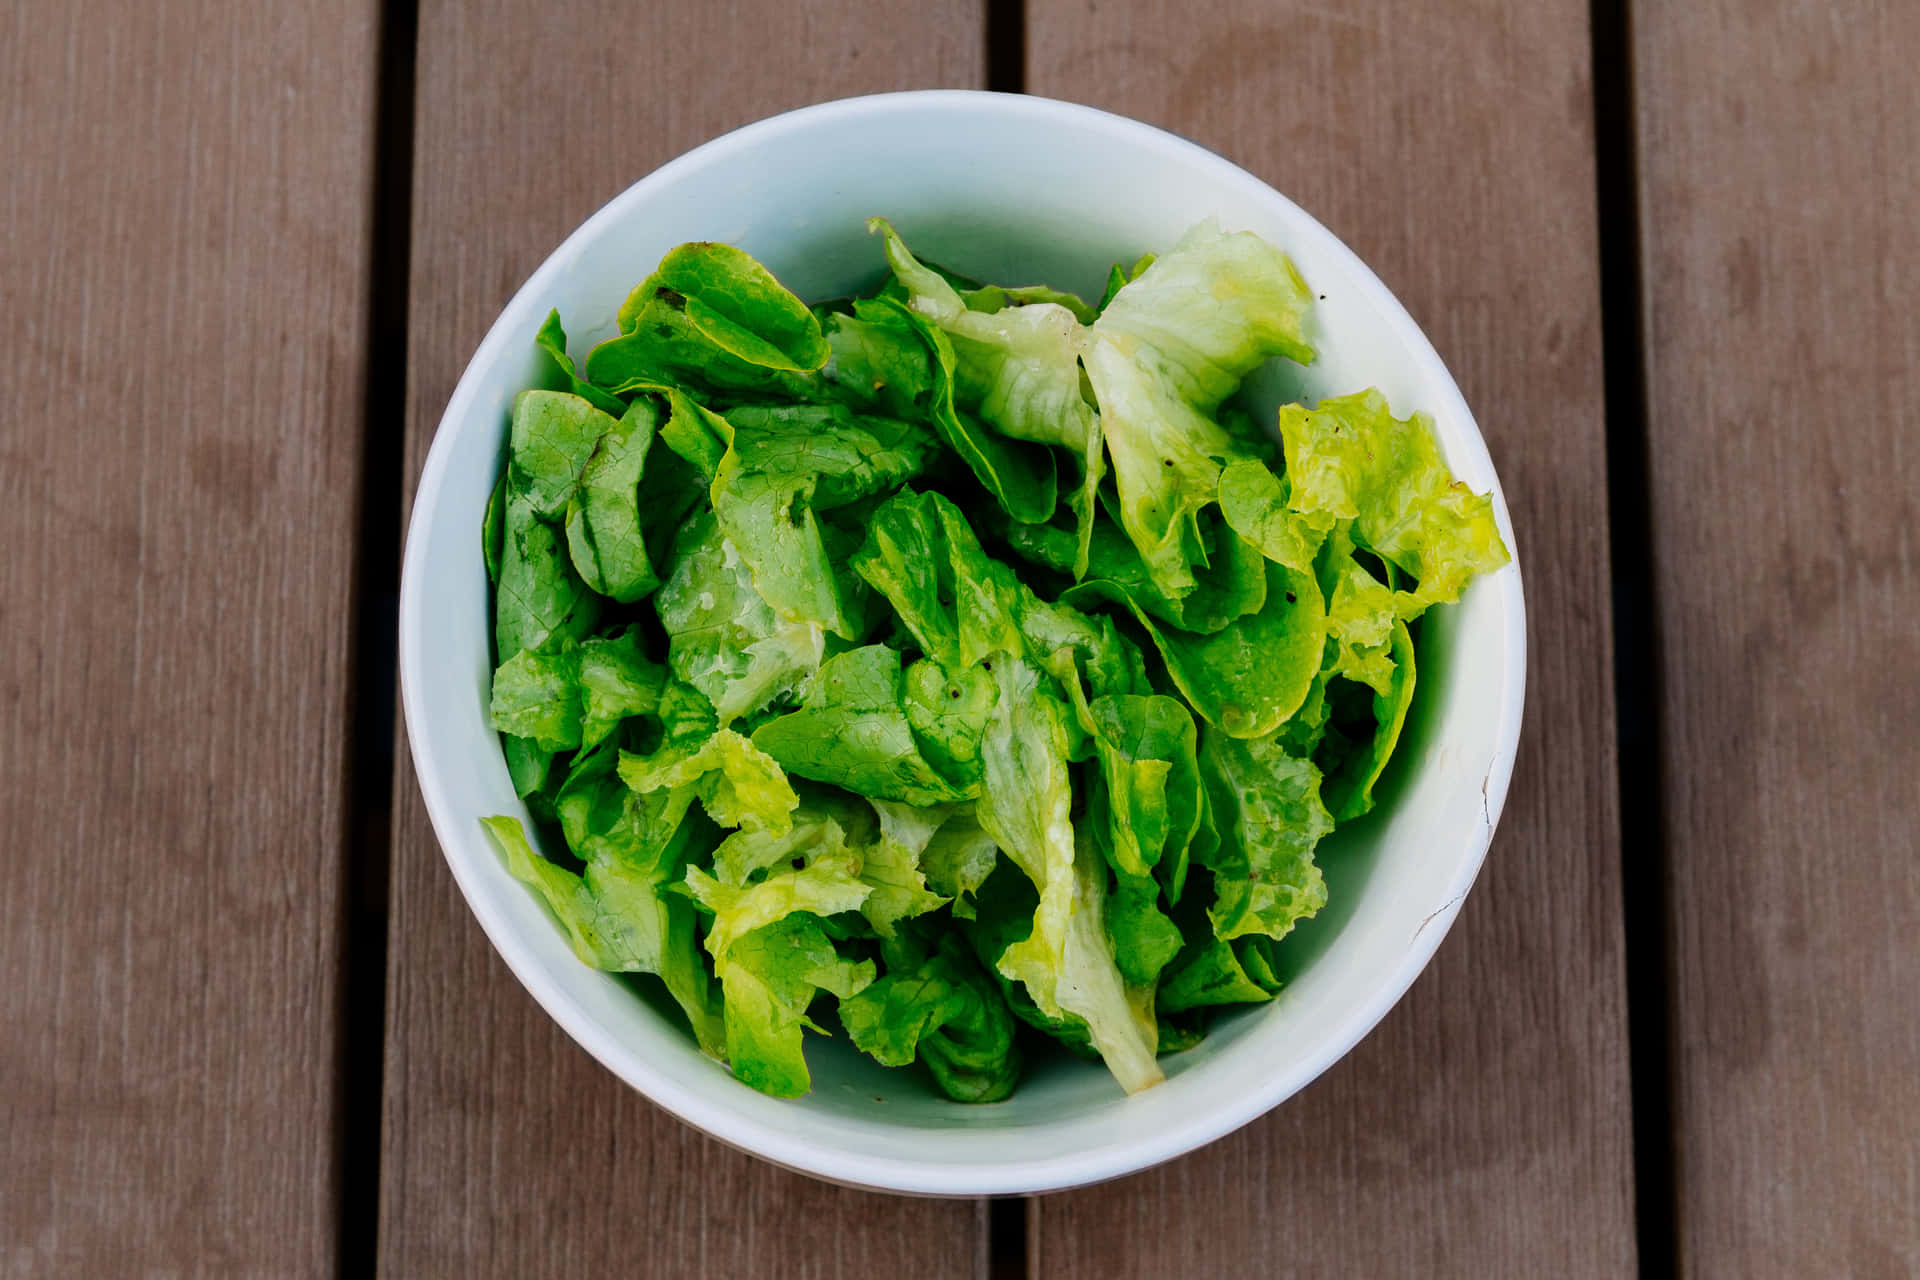 Health-conscious Choice - Enjoy the Freshness of a Salady Plate